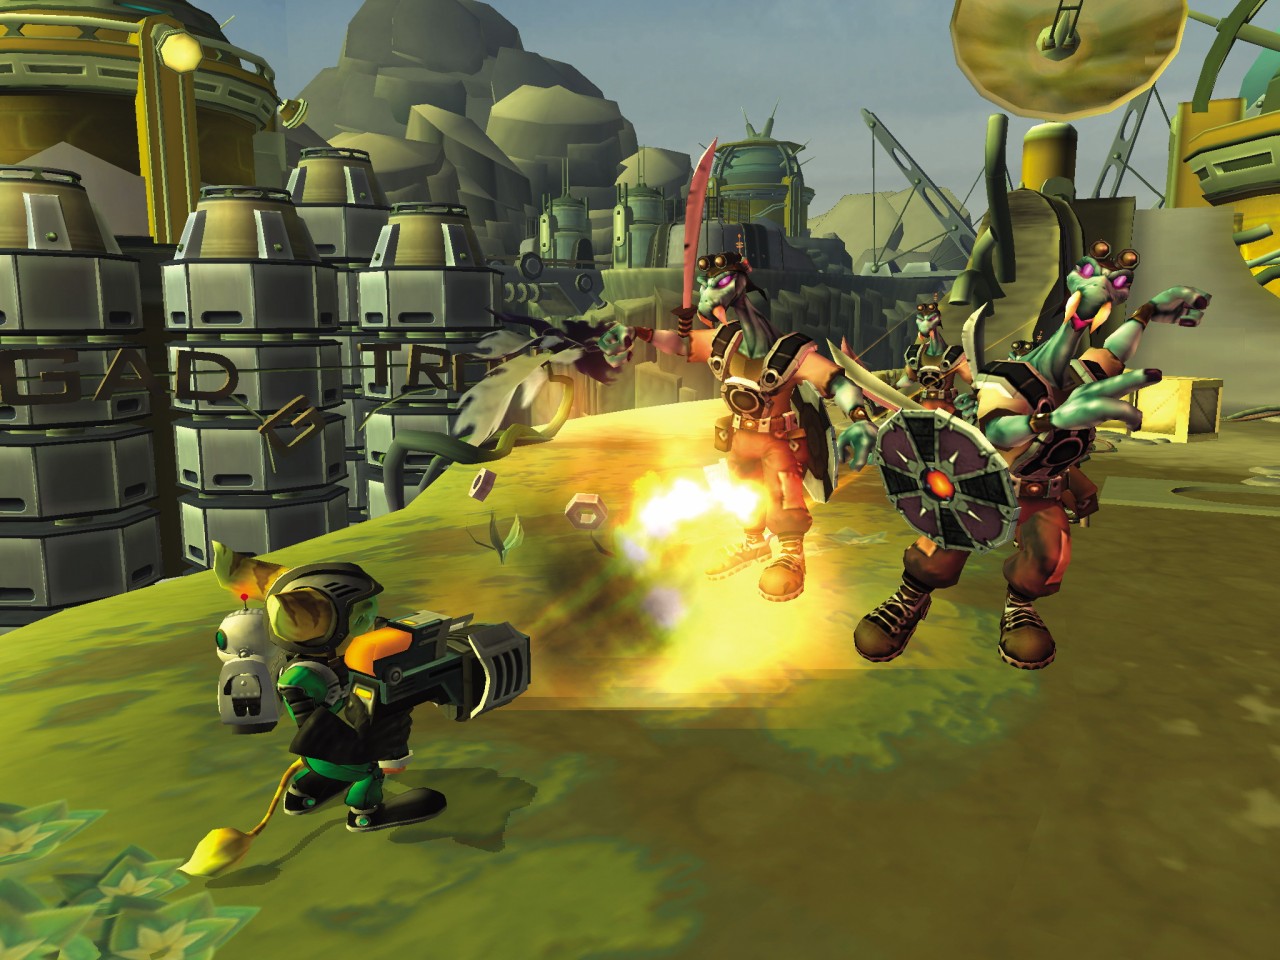 Screenshots - Ratchet & Clank: Going Commando - PS2 - Ratchet Galaxy